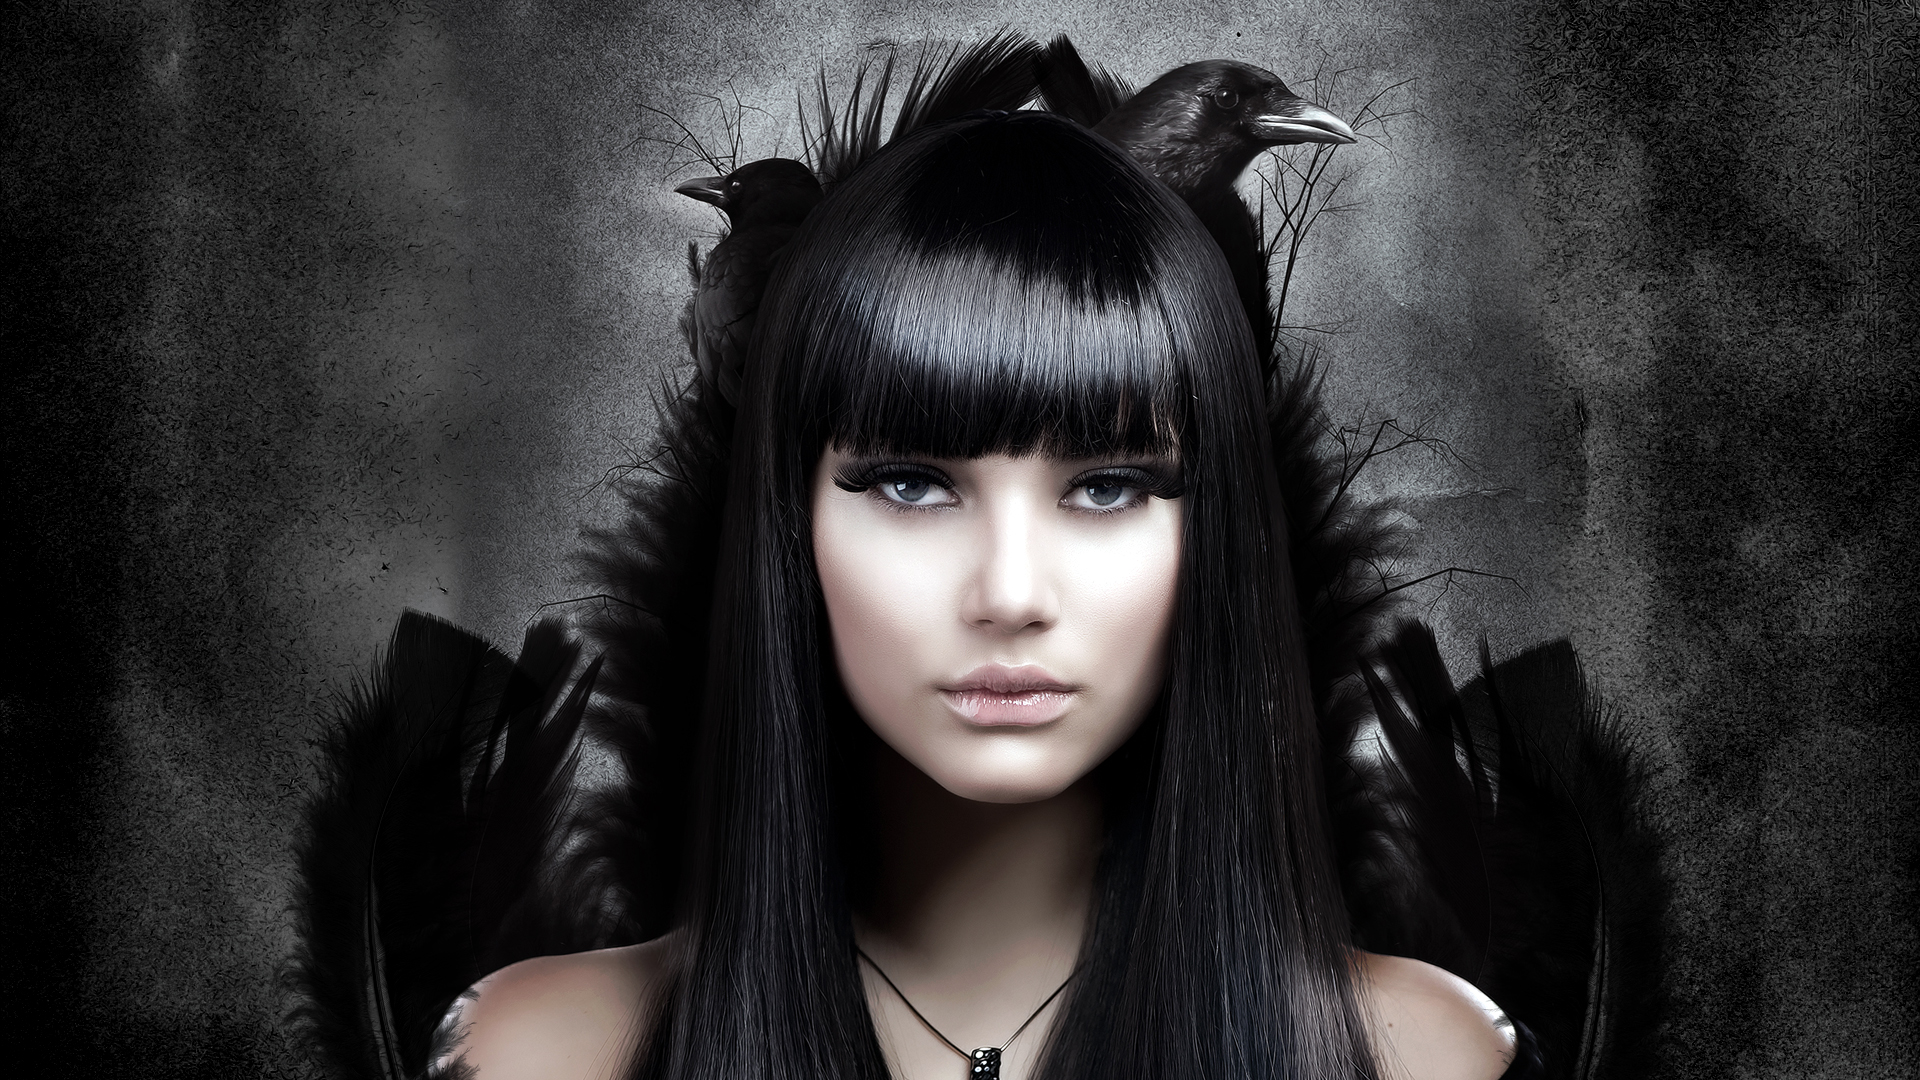 Poe Vampire Raven Crow Birds Women Females Girls Mood Face Wallpaper